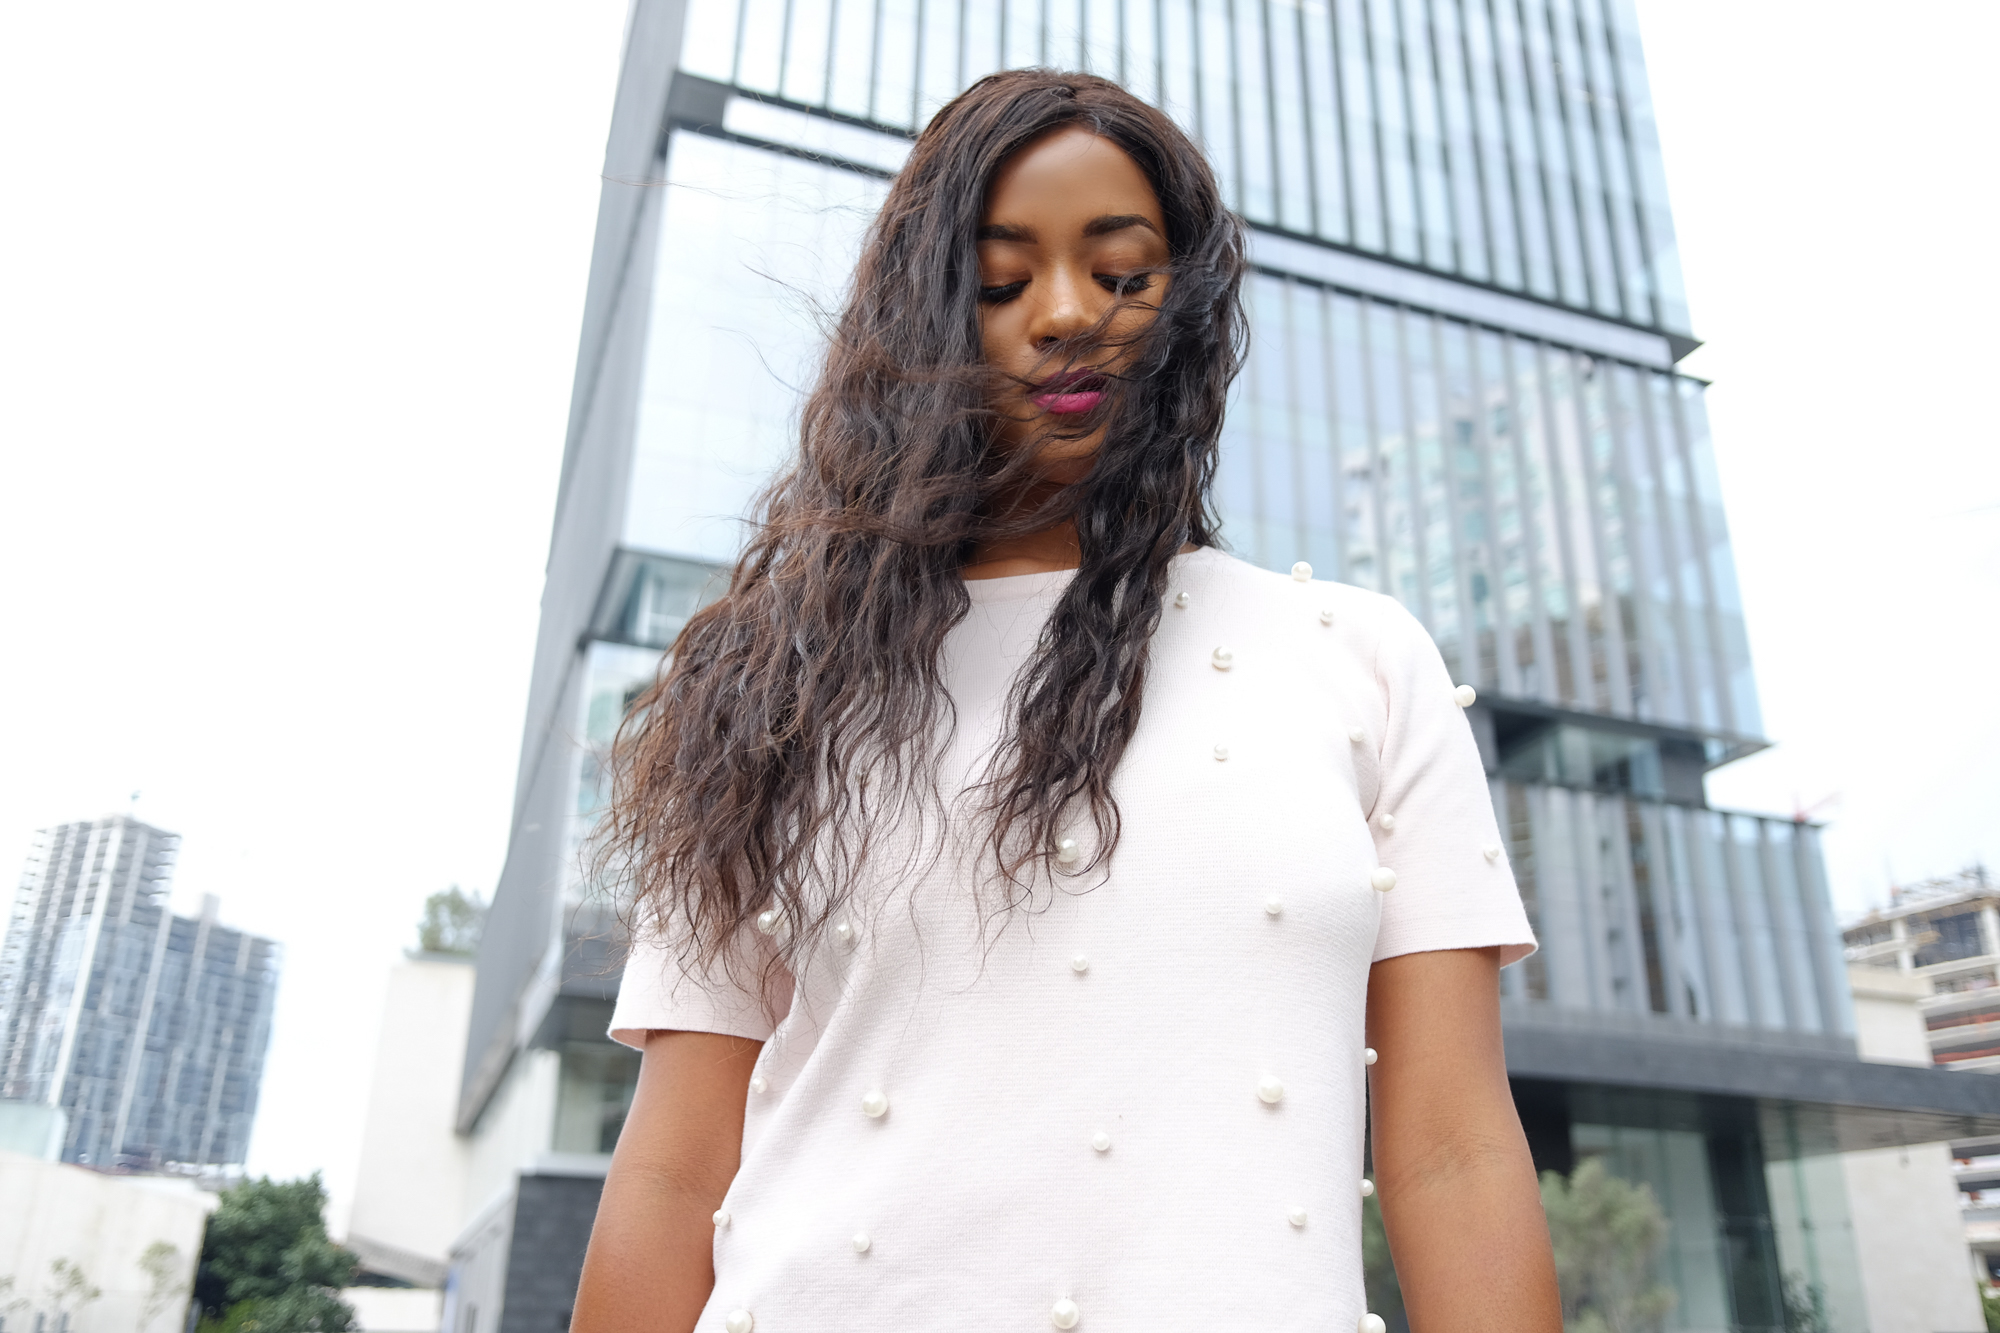 New York Fashion Blogger MeetMiri wearing a beaded top 